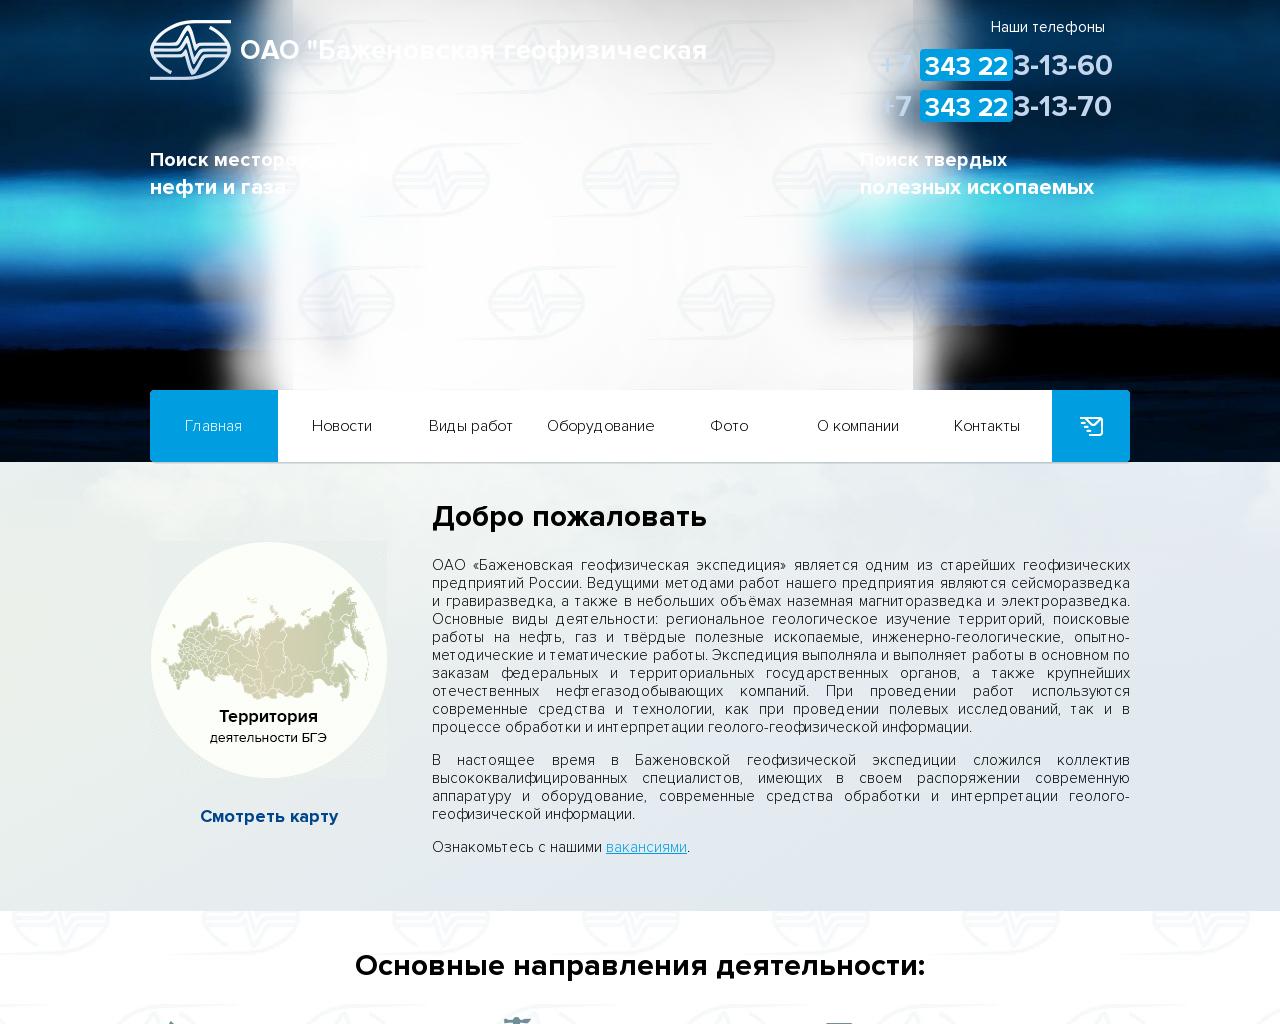 Изображение сайта bge.ru в разрешении 1280x1024